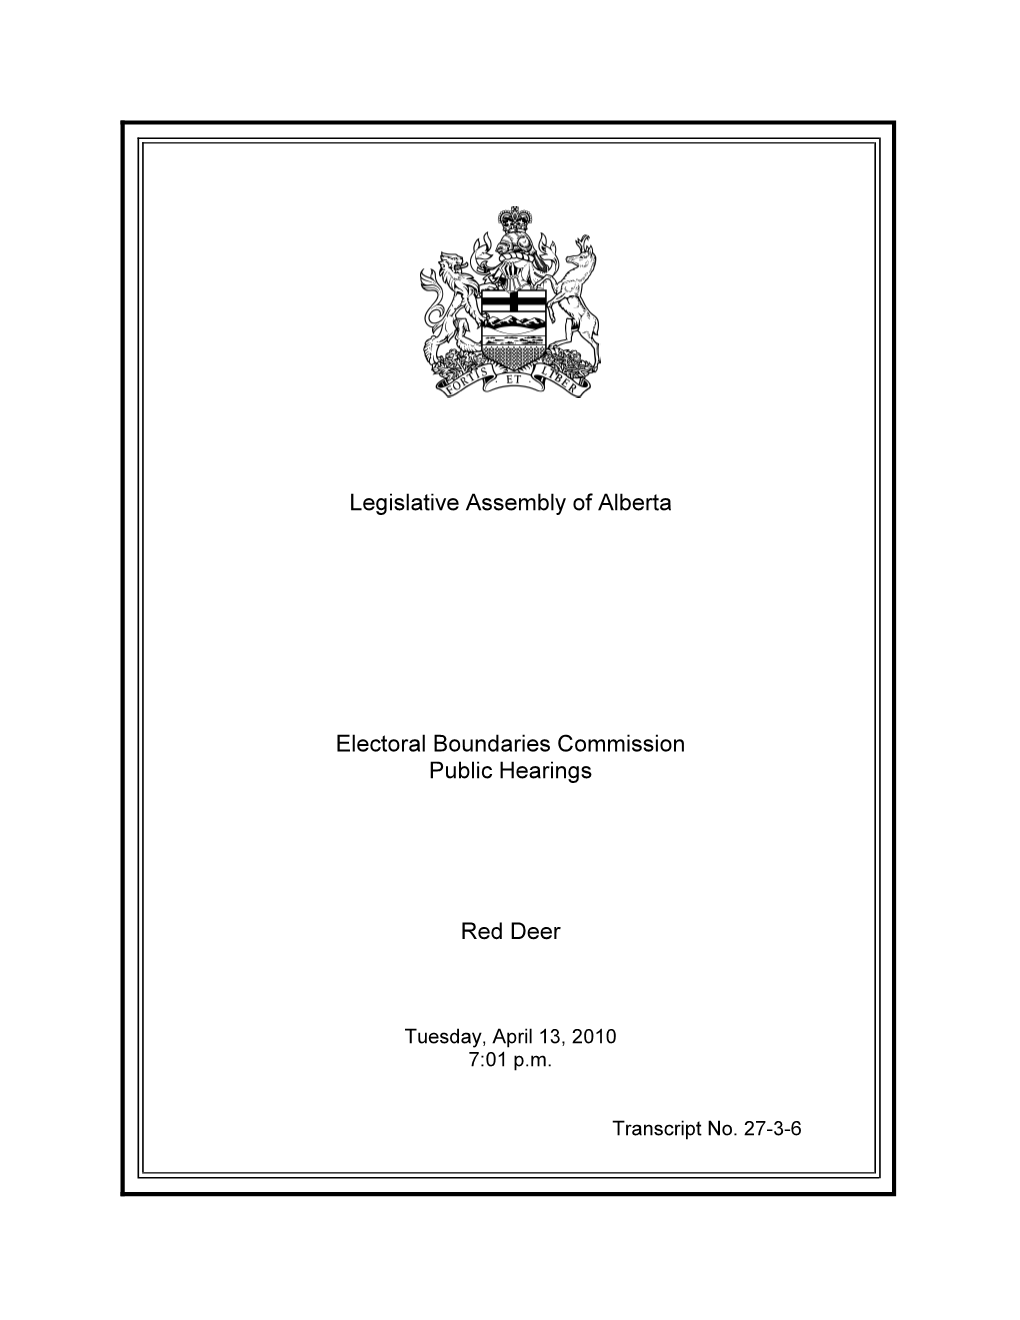 Legislative Assembly of Alberta Electoral Boundaries Commission